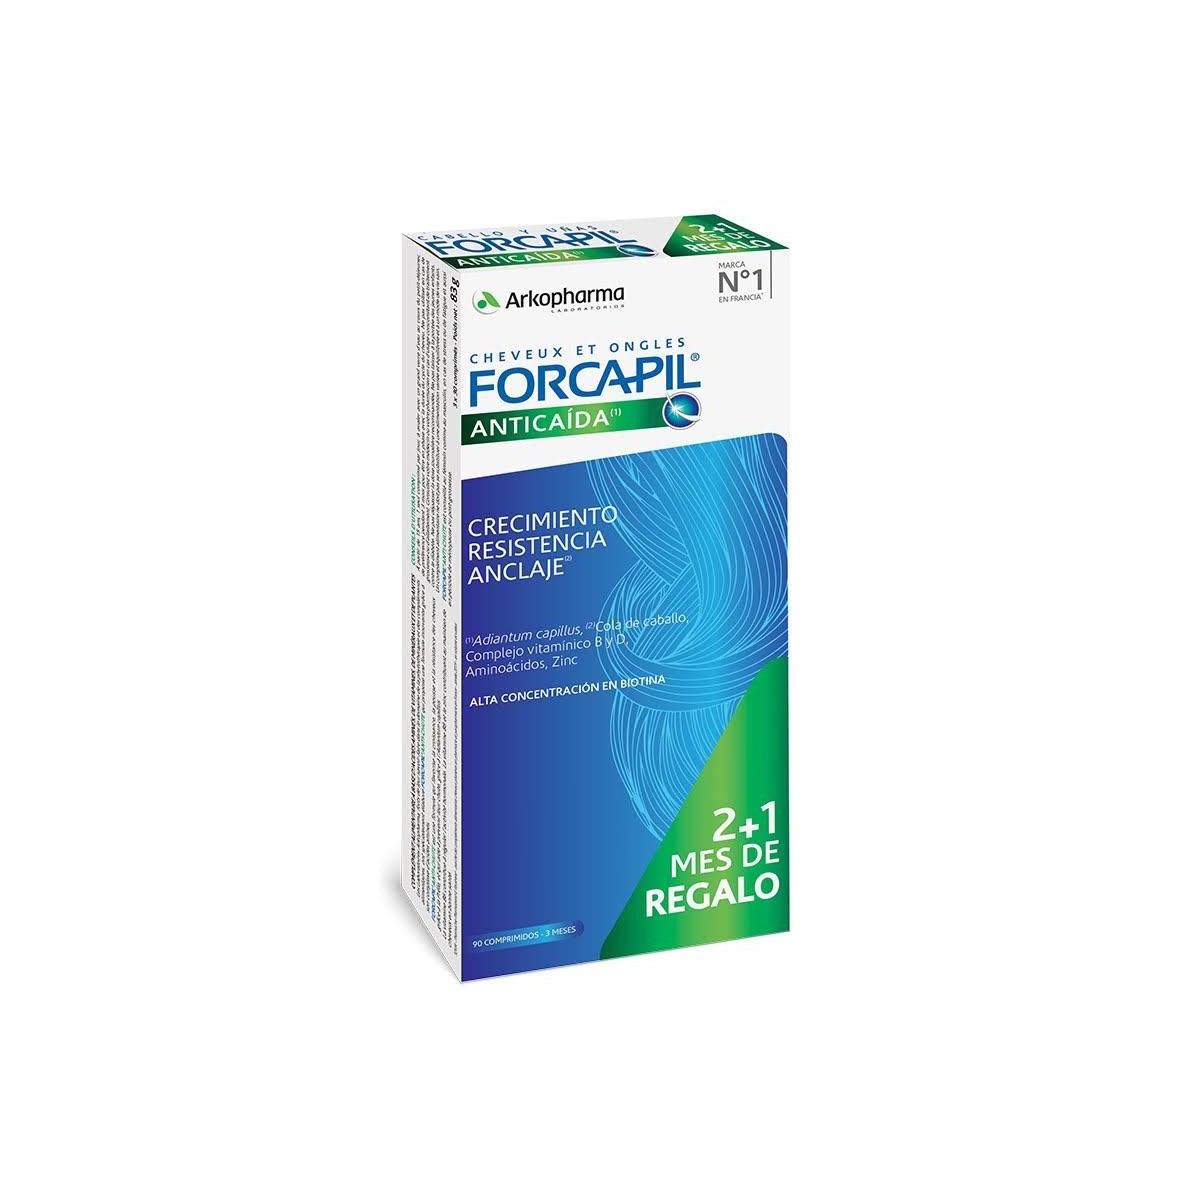 arkopharma-forcapil-anticaida-cabello-regalo-21-90-capsulas